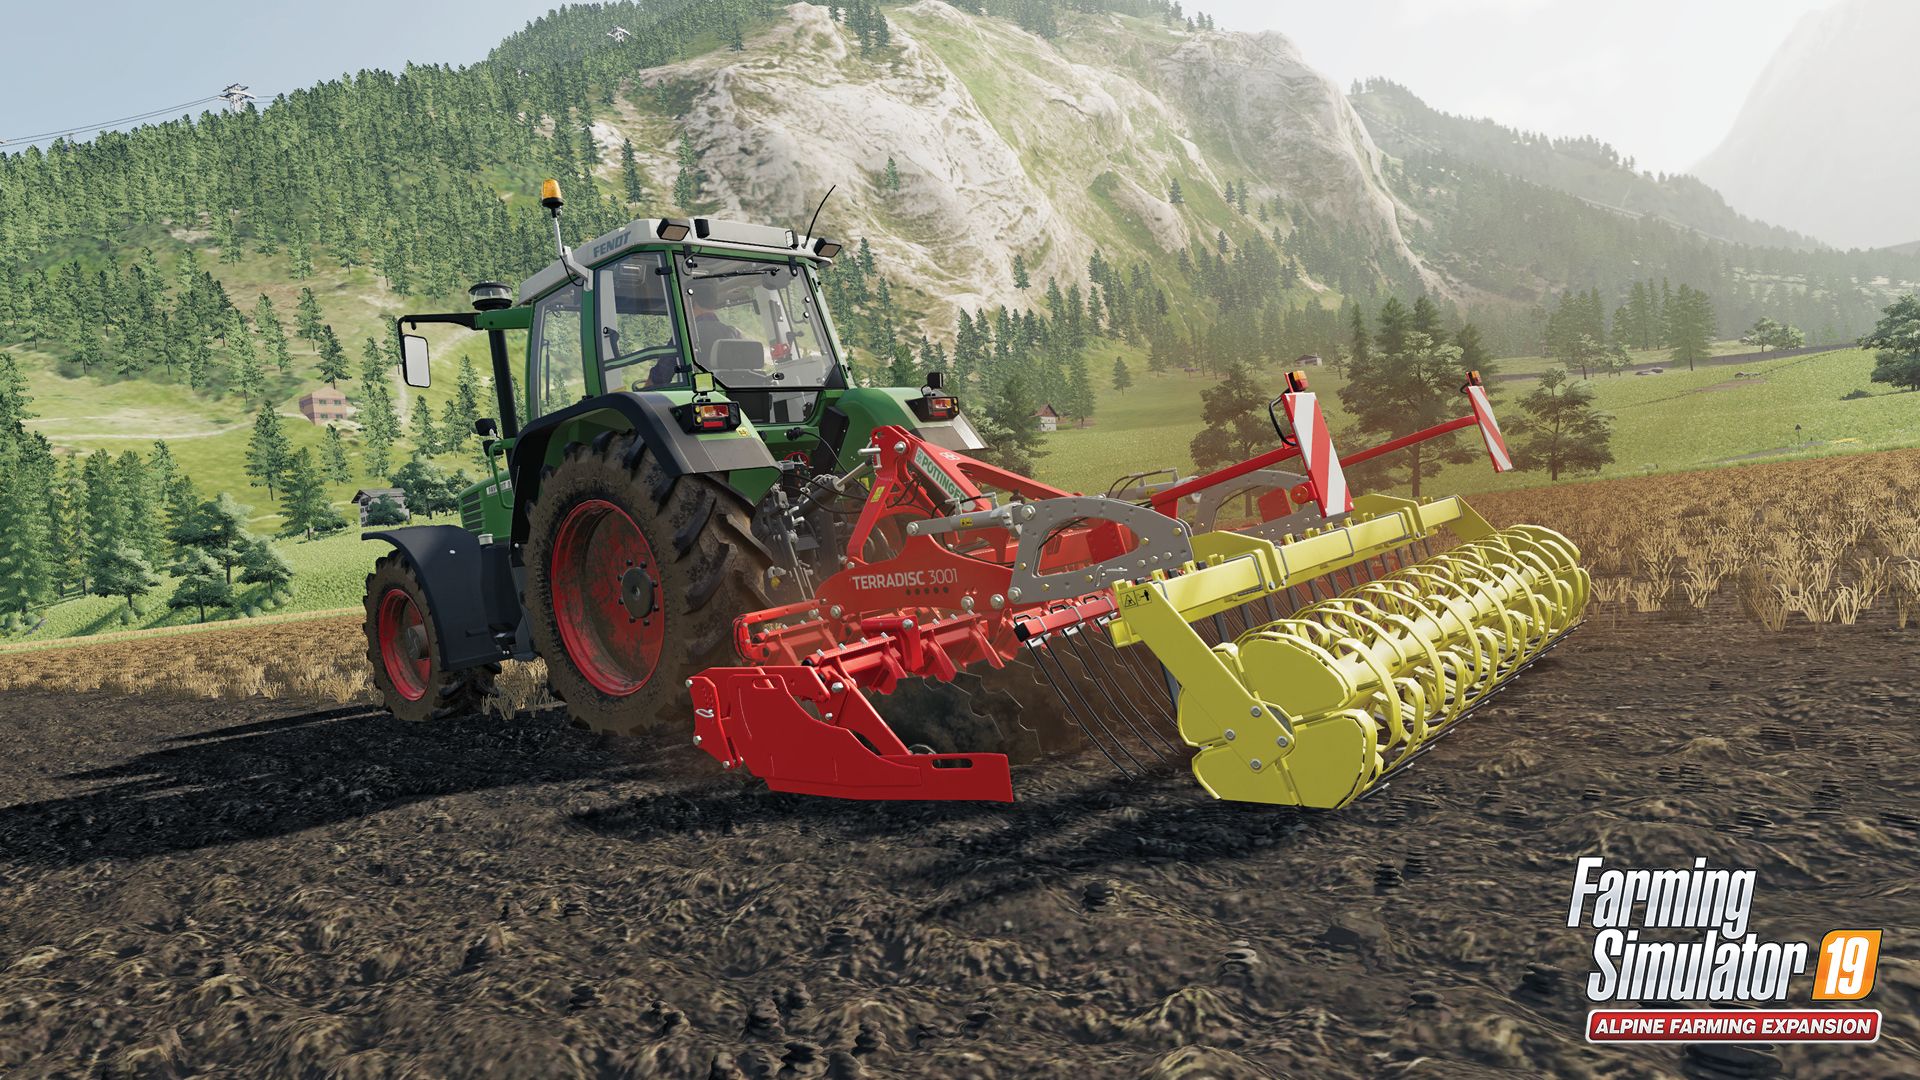 Illustration de l'article sur Farming Simulator 19Extension Alpine Farming